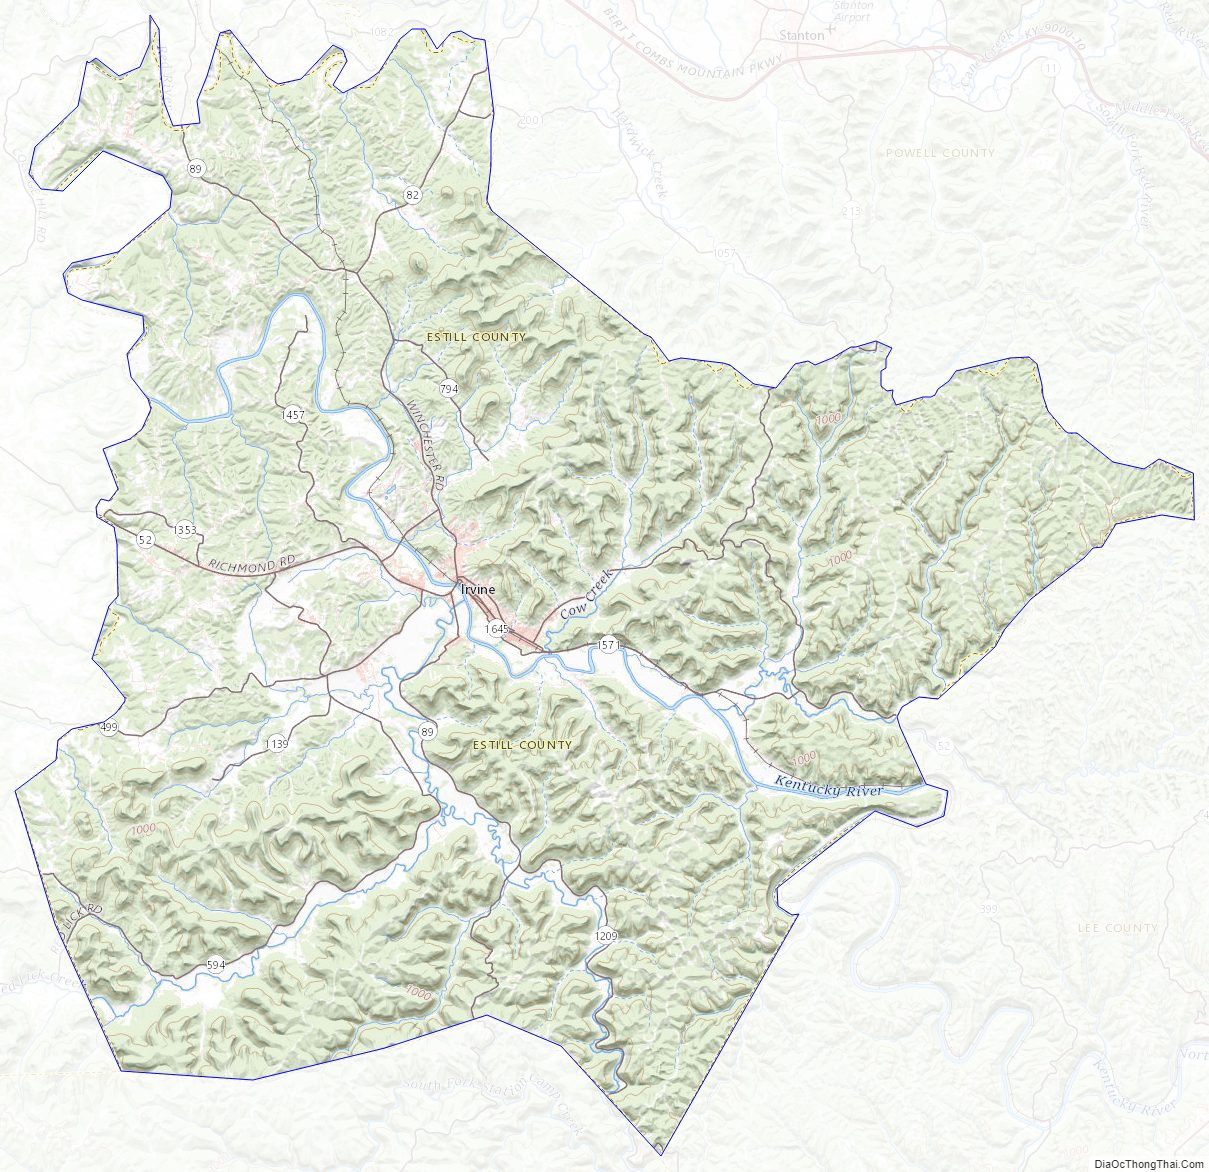 Topographic map of Estill County, Kentucky